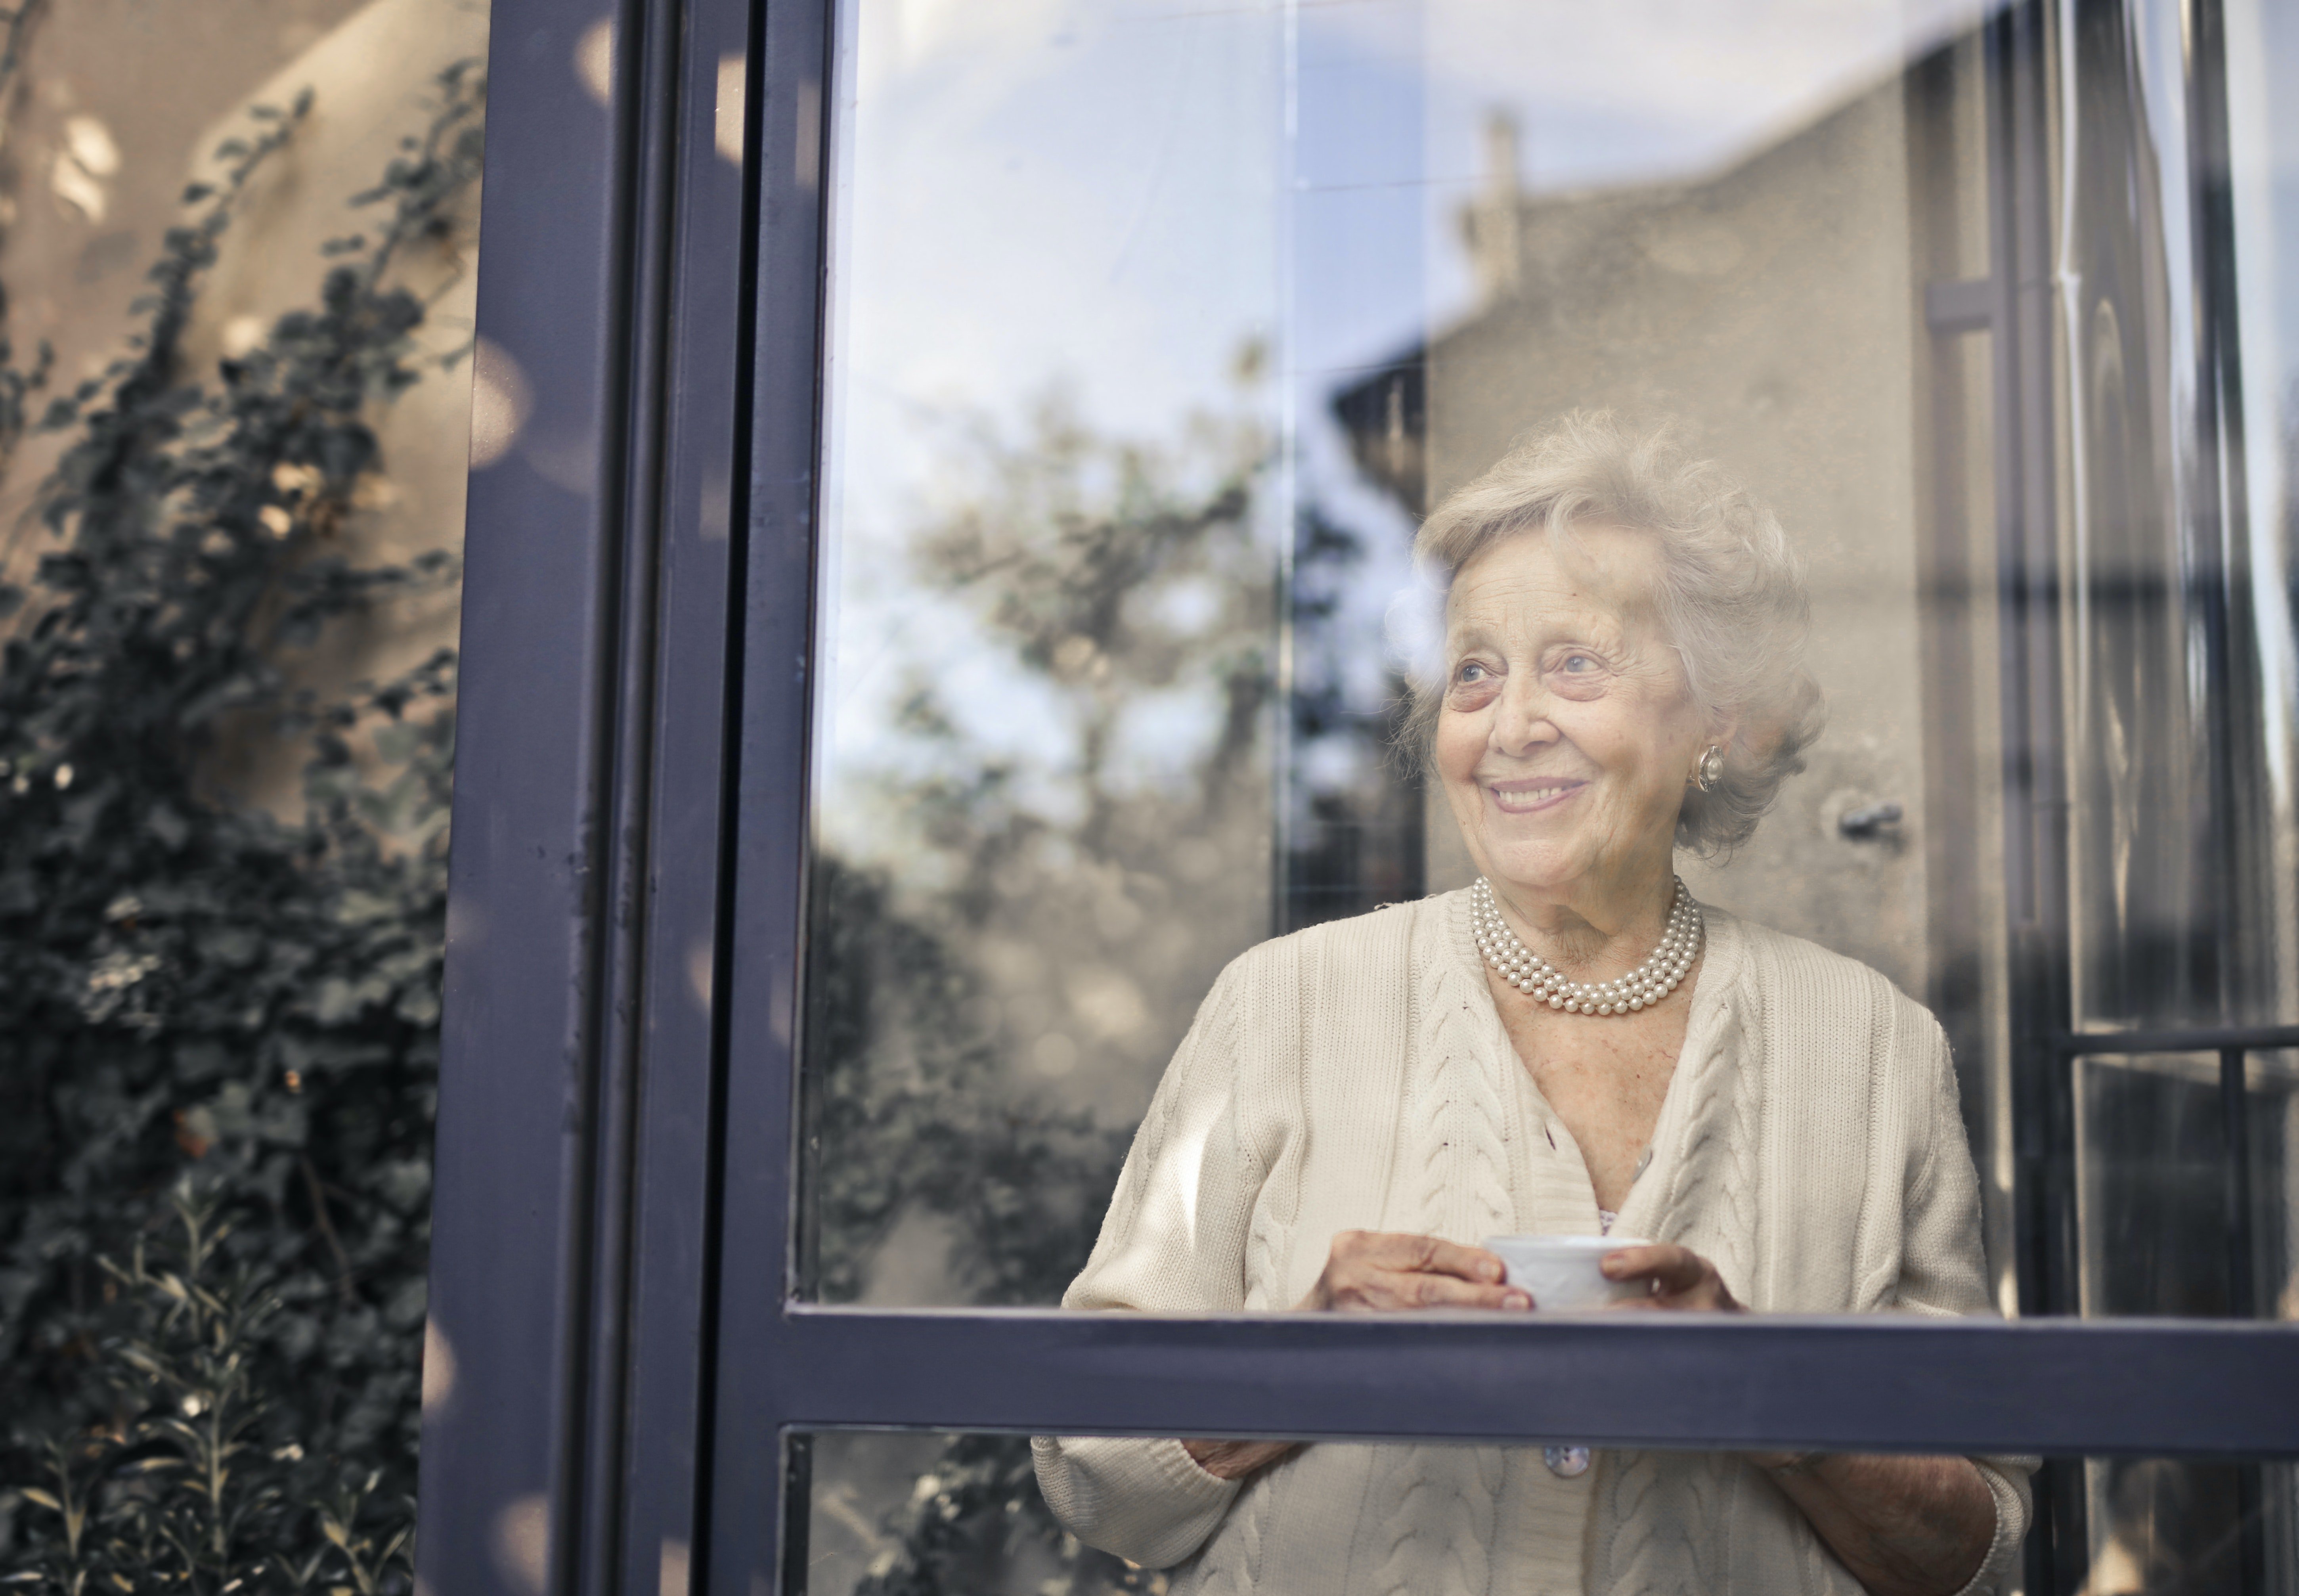 An elderly woman smiling. | Source: Pexels